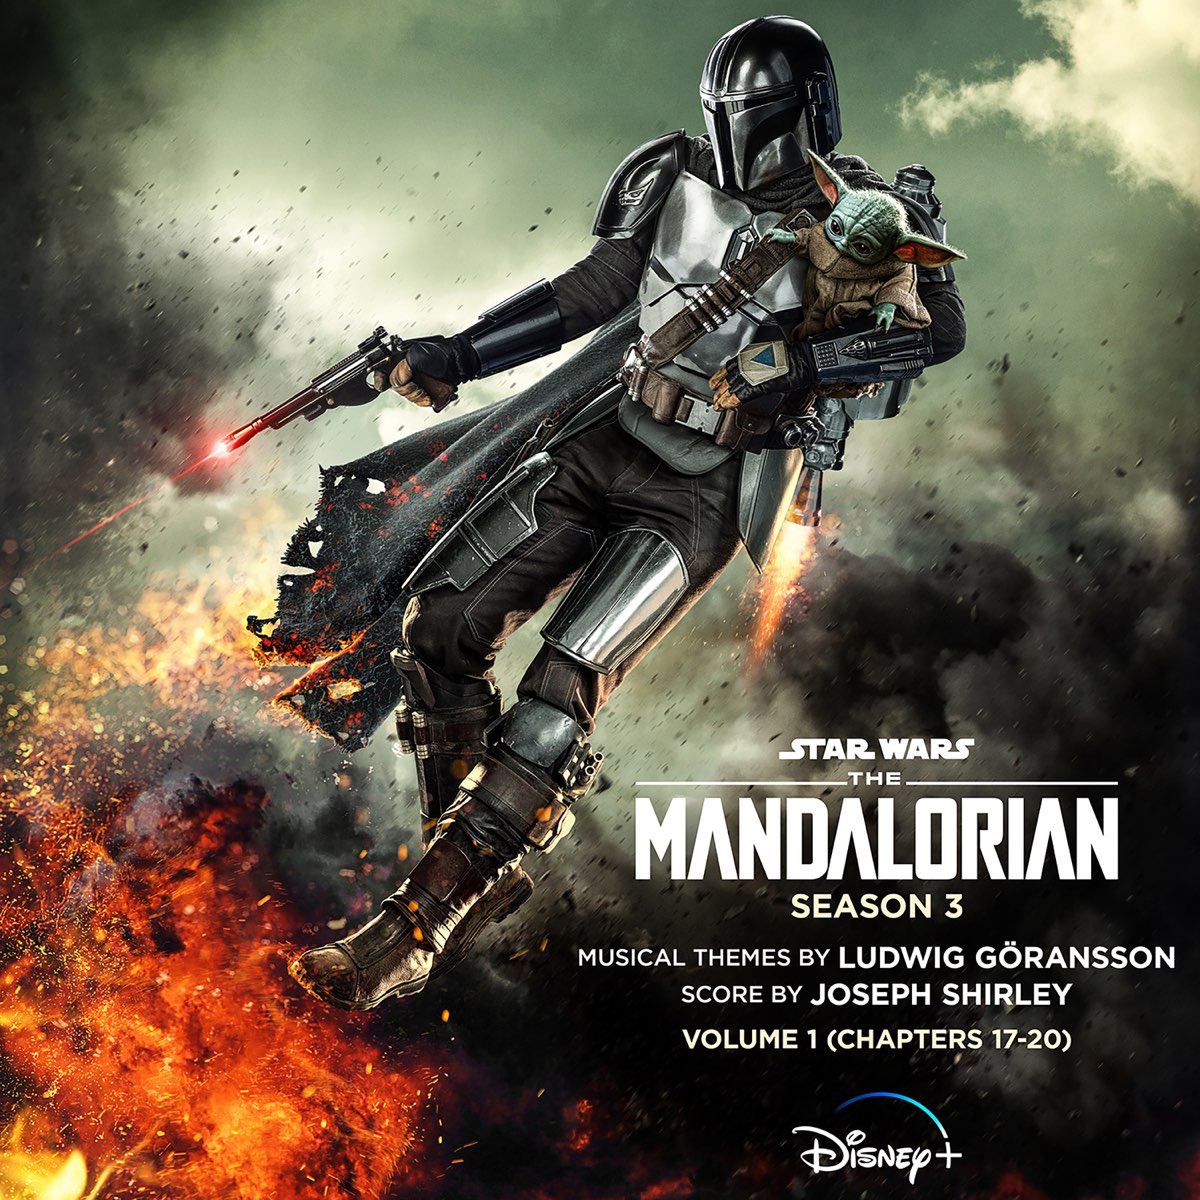 The Mandalorian: Season 3 - Vol. 1 (Chapters 17-20) [Original Score] -  Album by Joseph Shirley & Ludwig Göransson - Apple Music